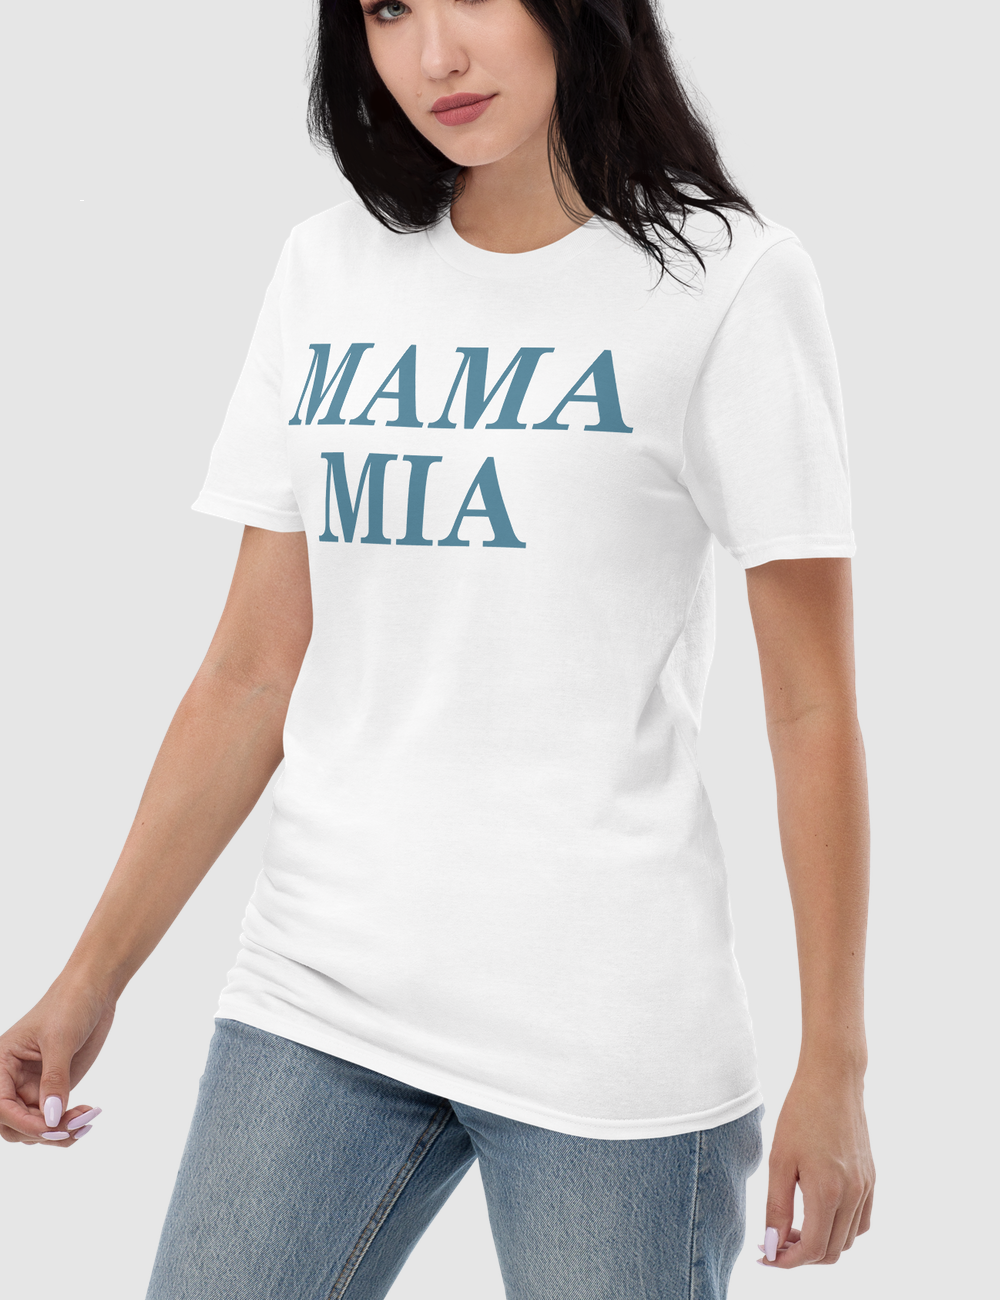 Mama Mia | Women's Relaxed T-Shirt OniTakai